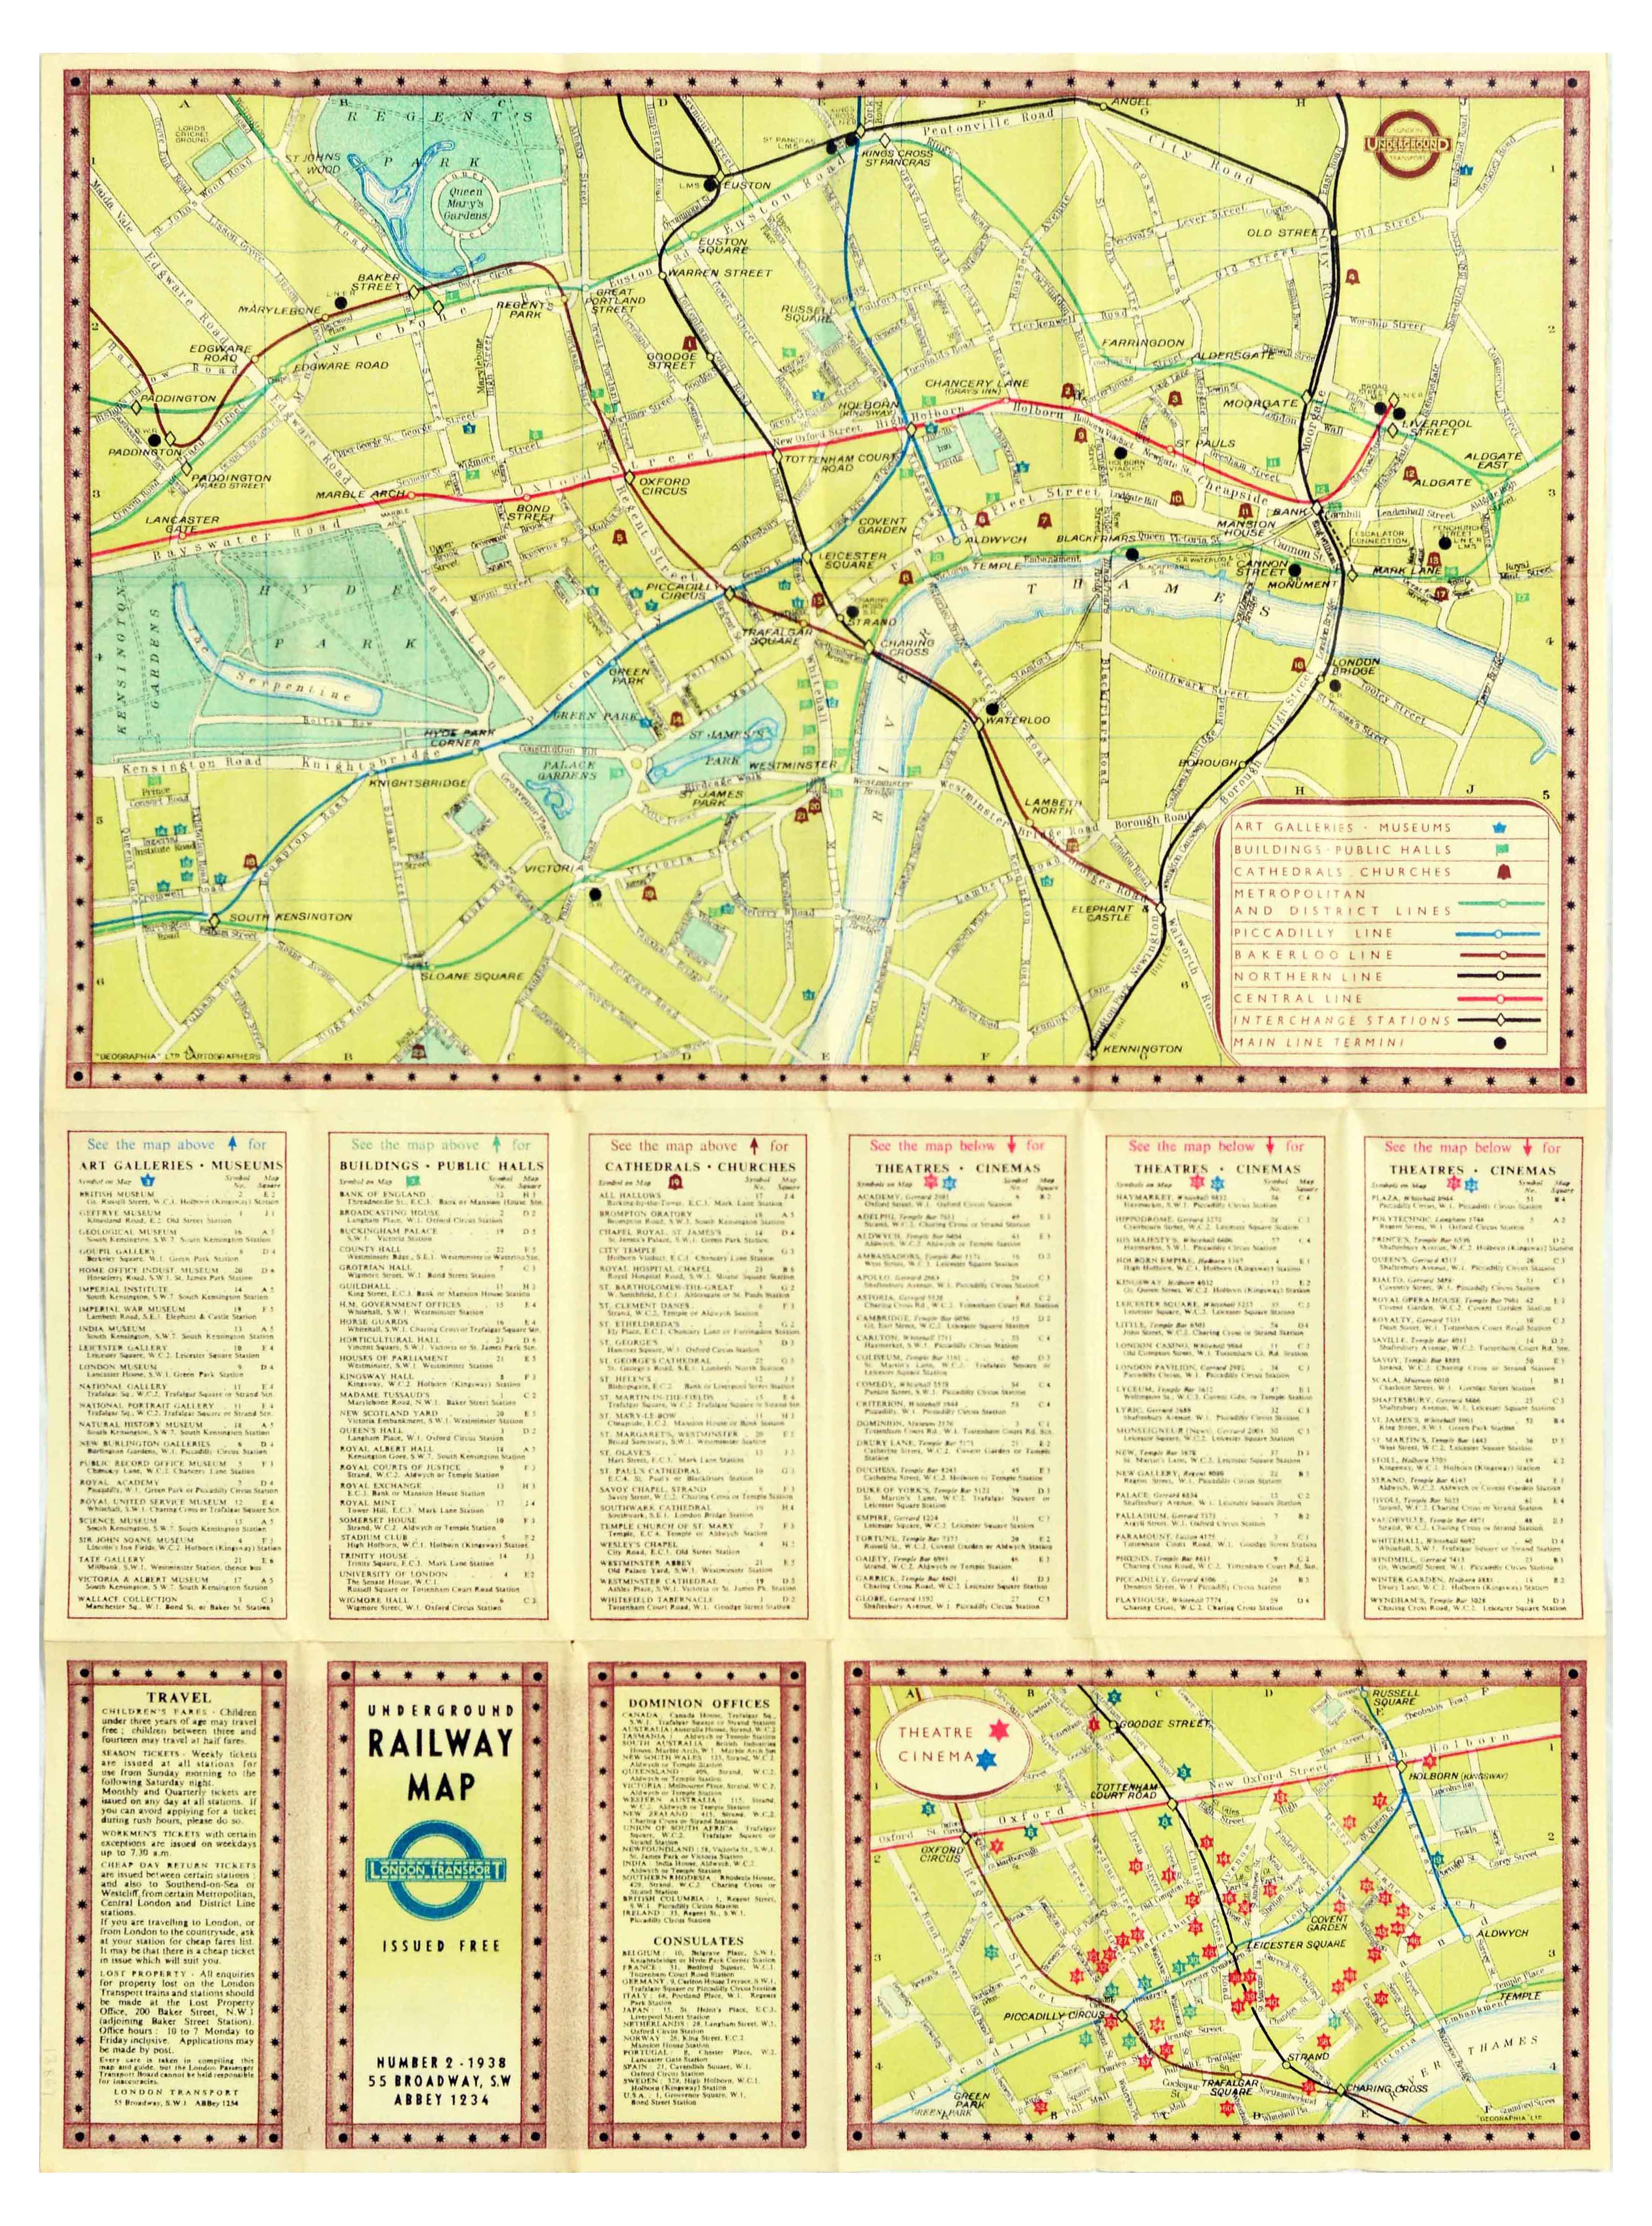 London Underground Poster Transport Tourist Railway Map - Image 2 of 2